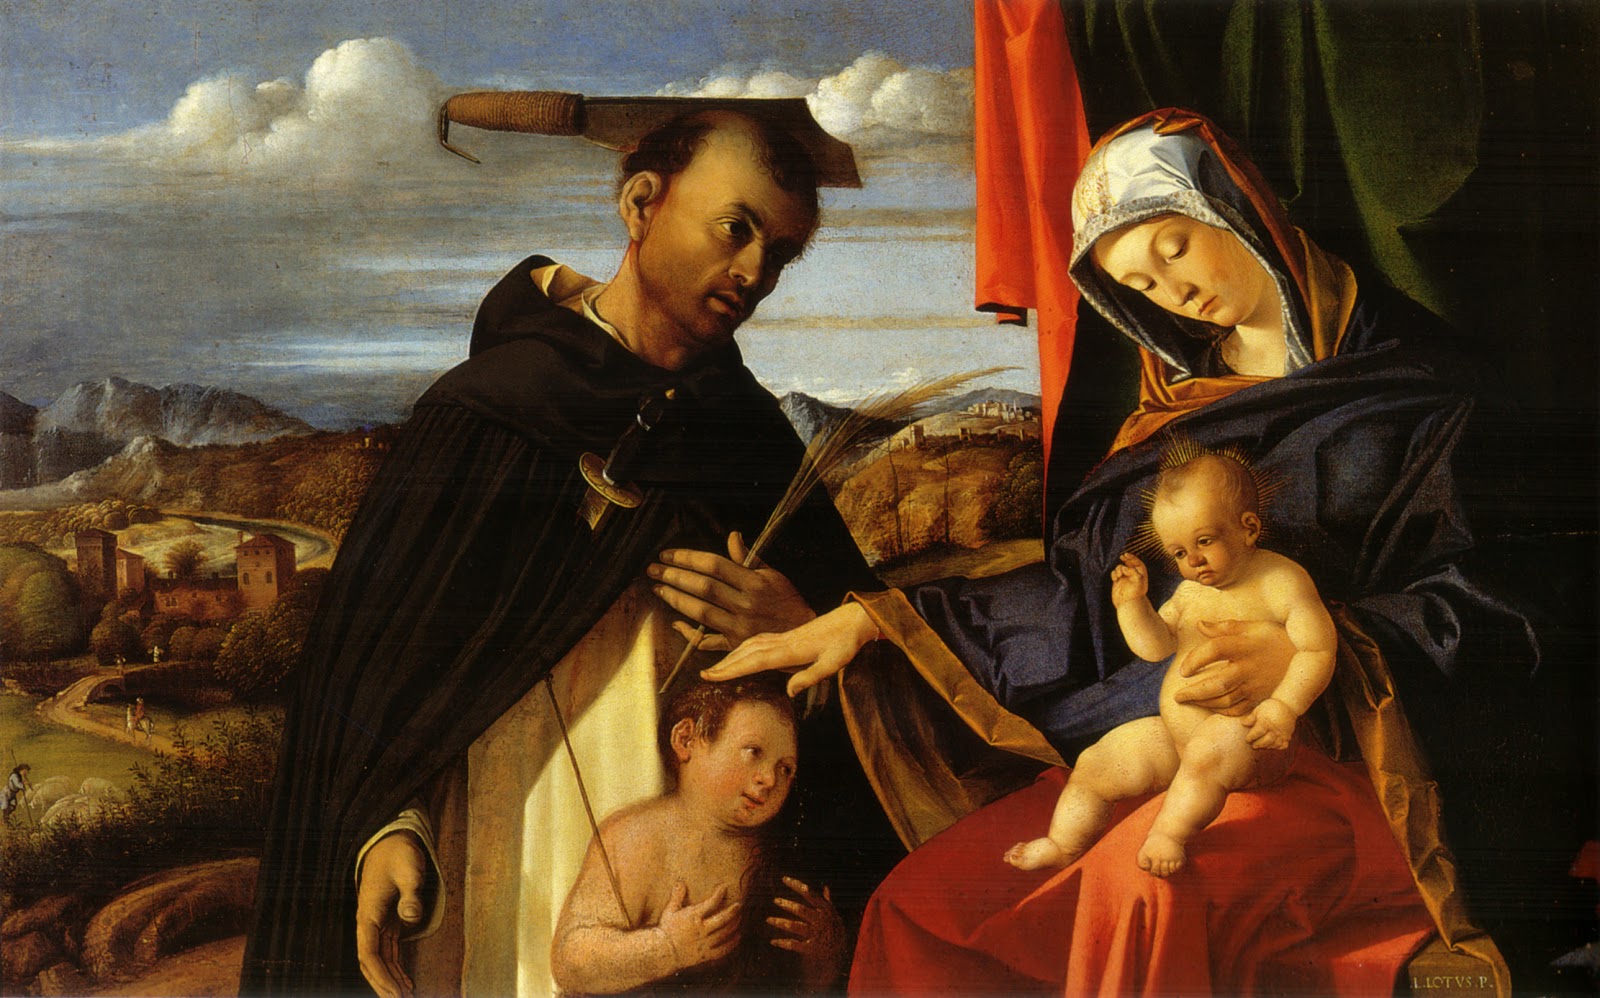 Lorenzo+Lotto-1480-1557 (60).jpg